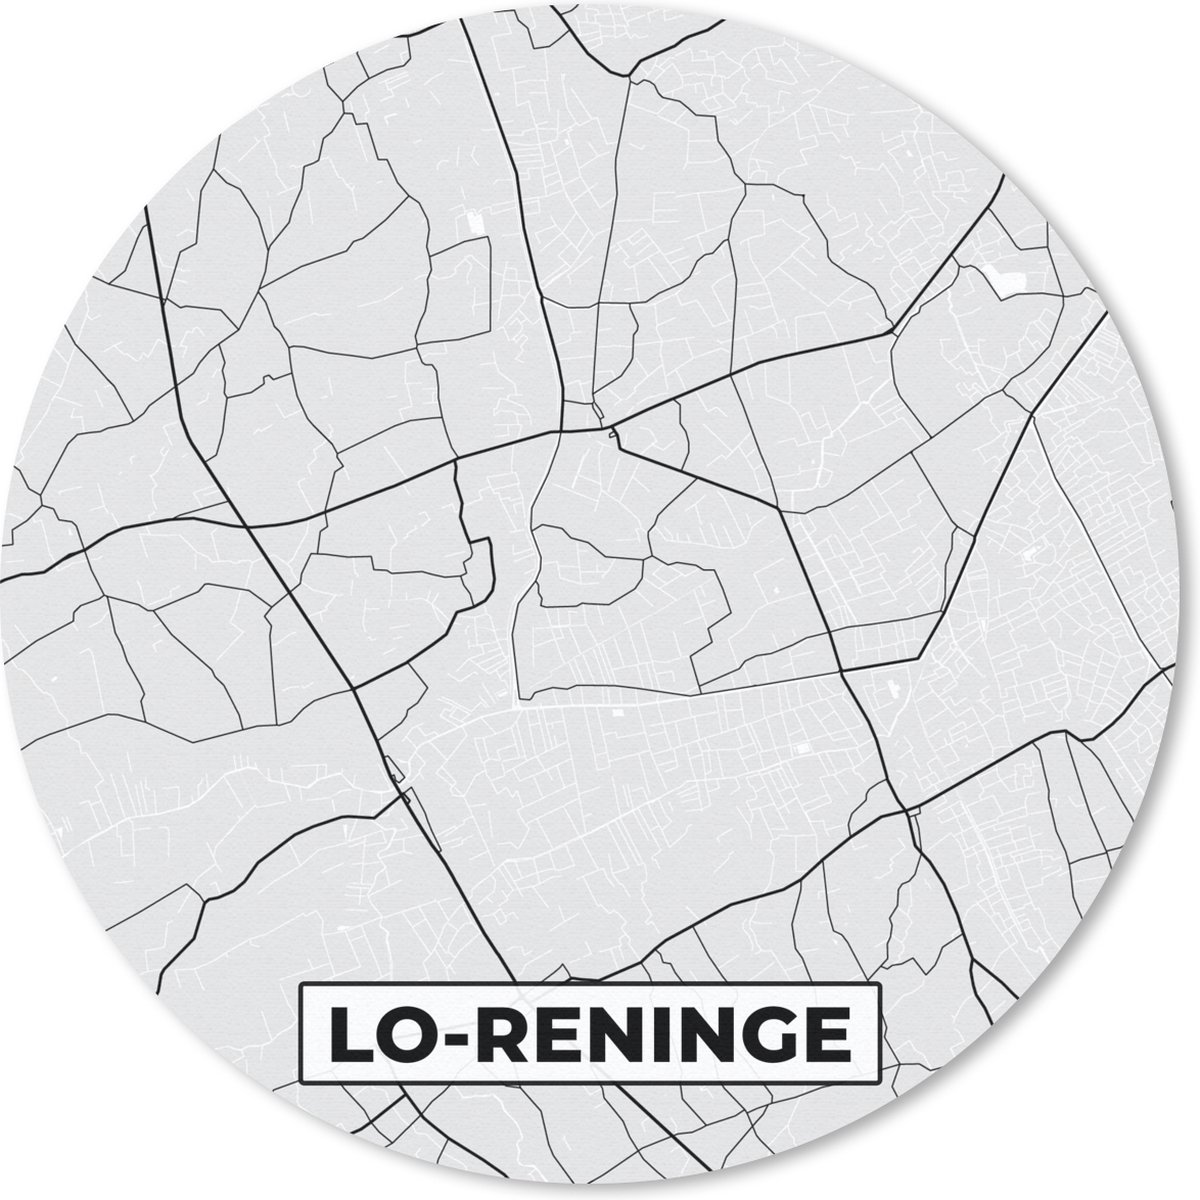 Muismat - Mousepad - Rond - België – Lo Reninge – Stadskaart – Kaart – Zwart Wit – Plattegrond - 20x20 cm - Ronde muismat